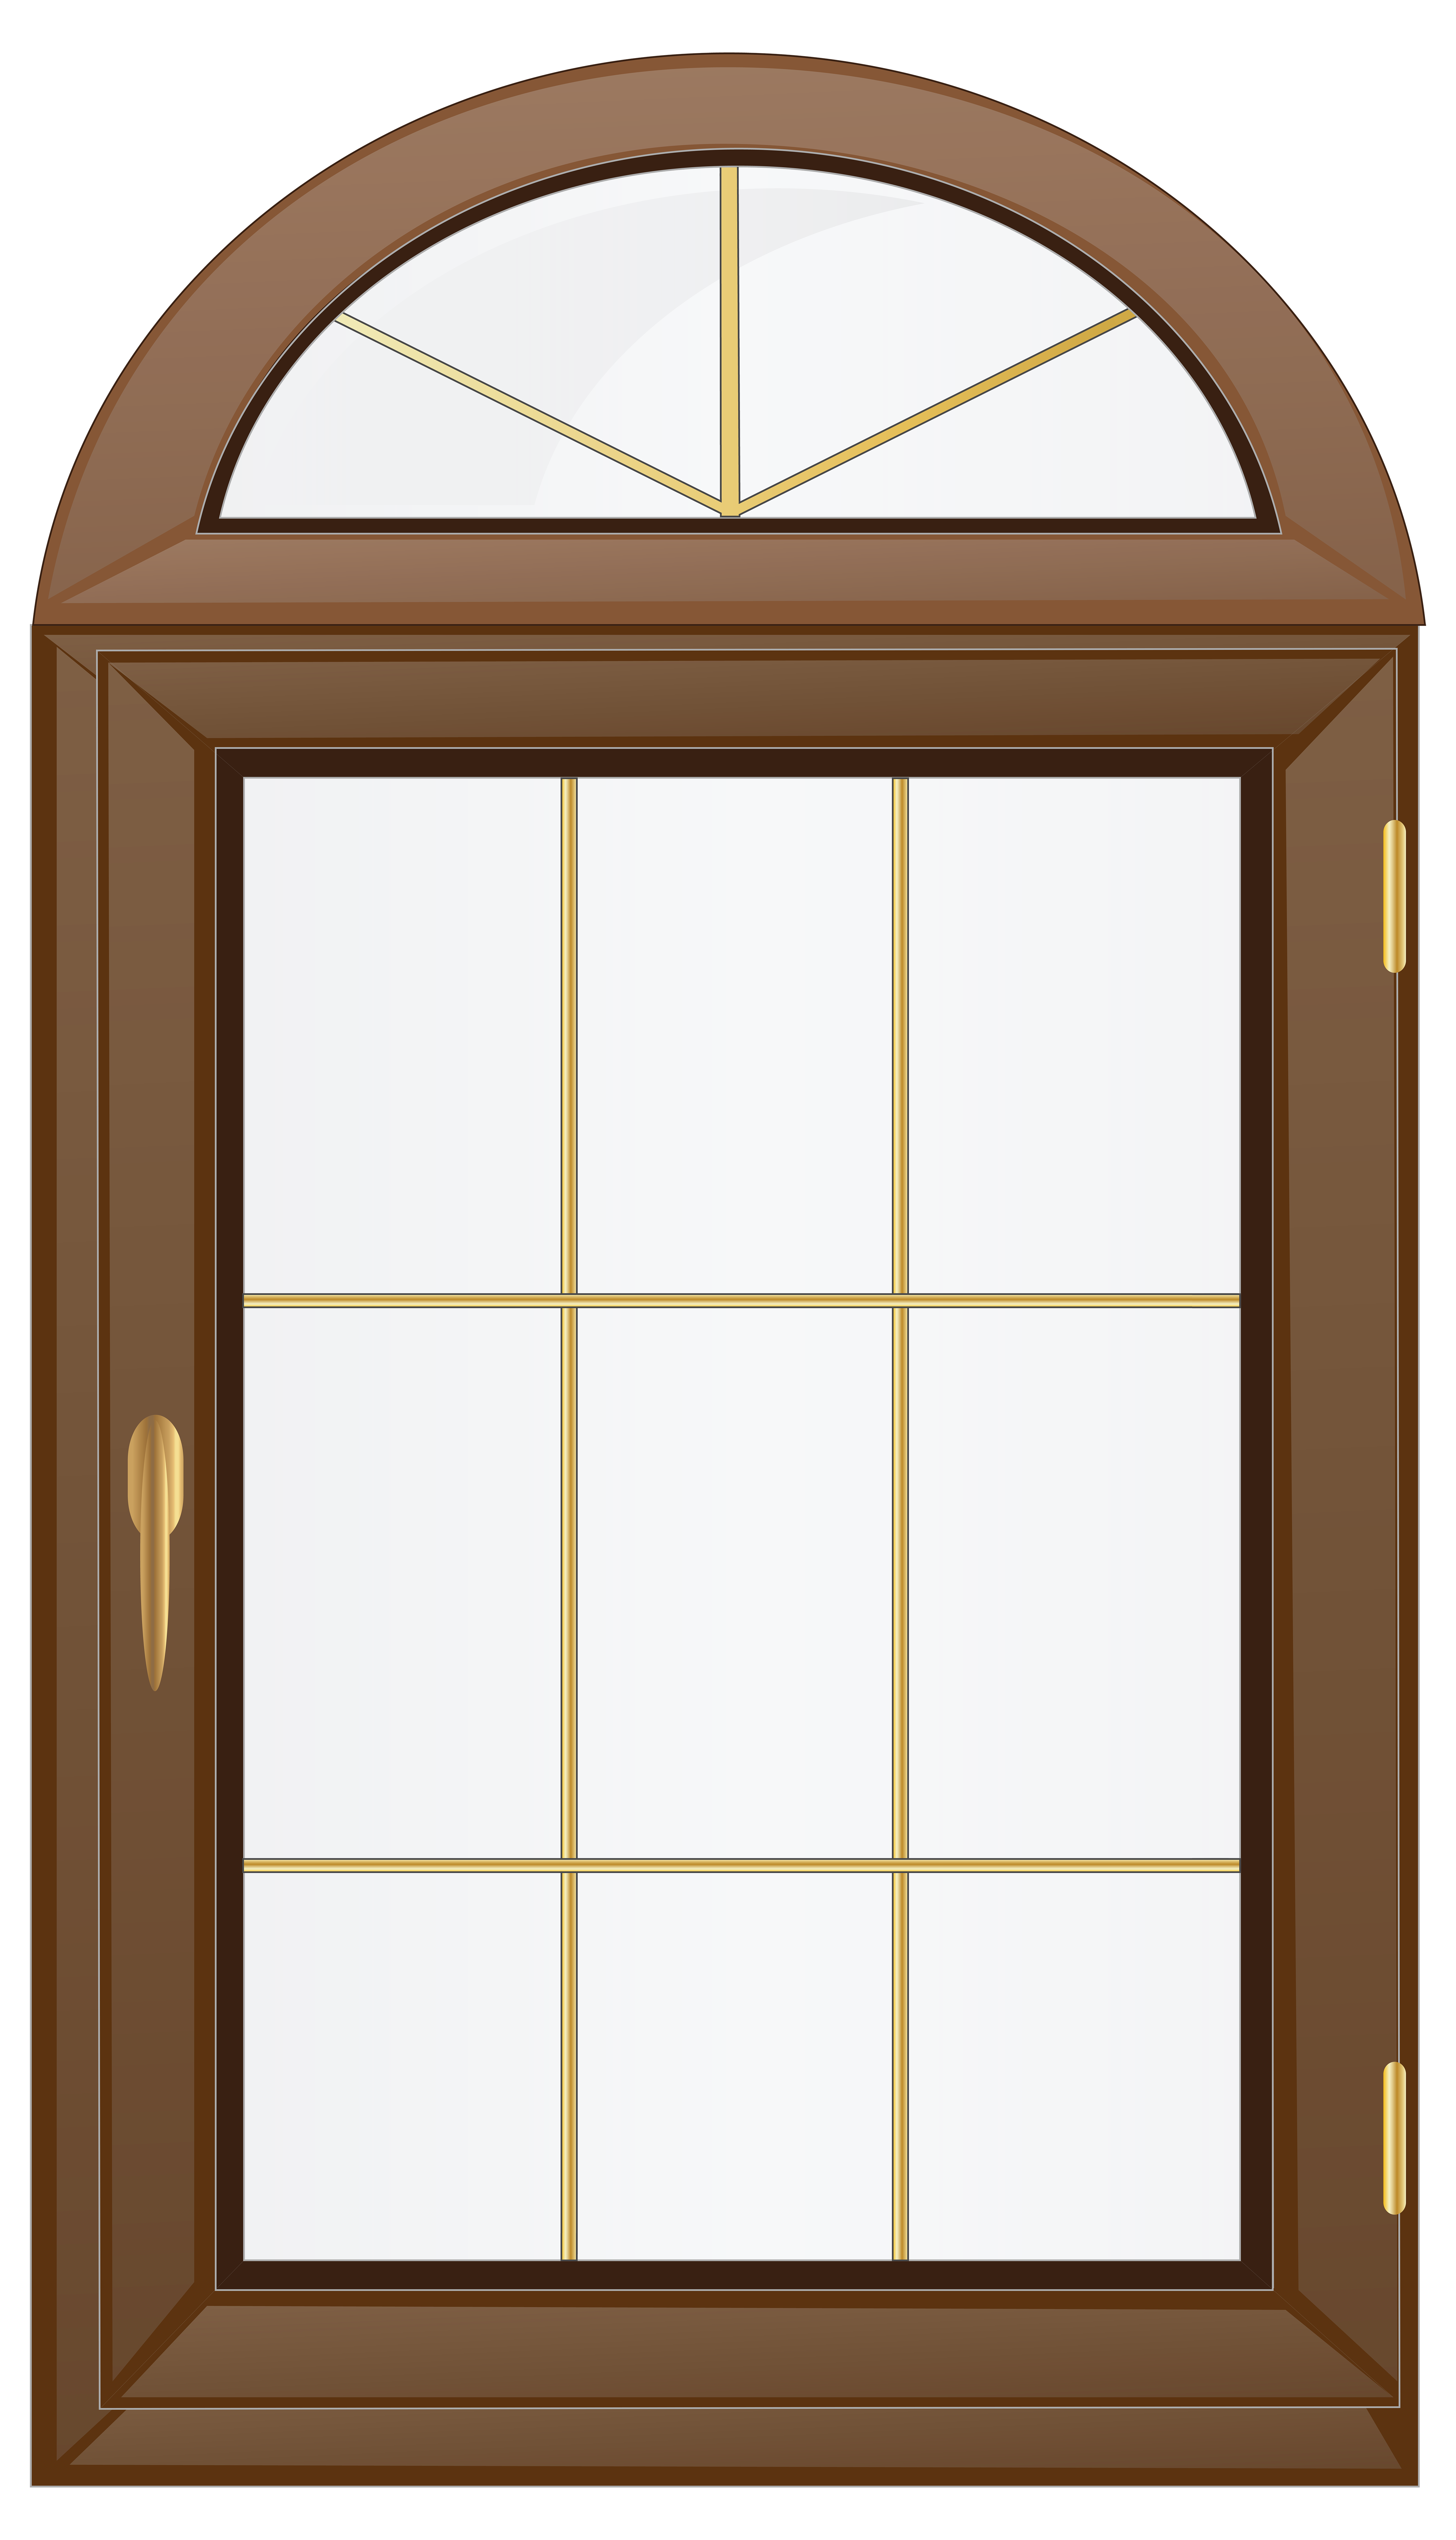 Transparent brown window.